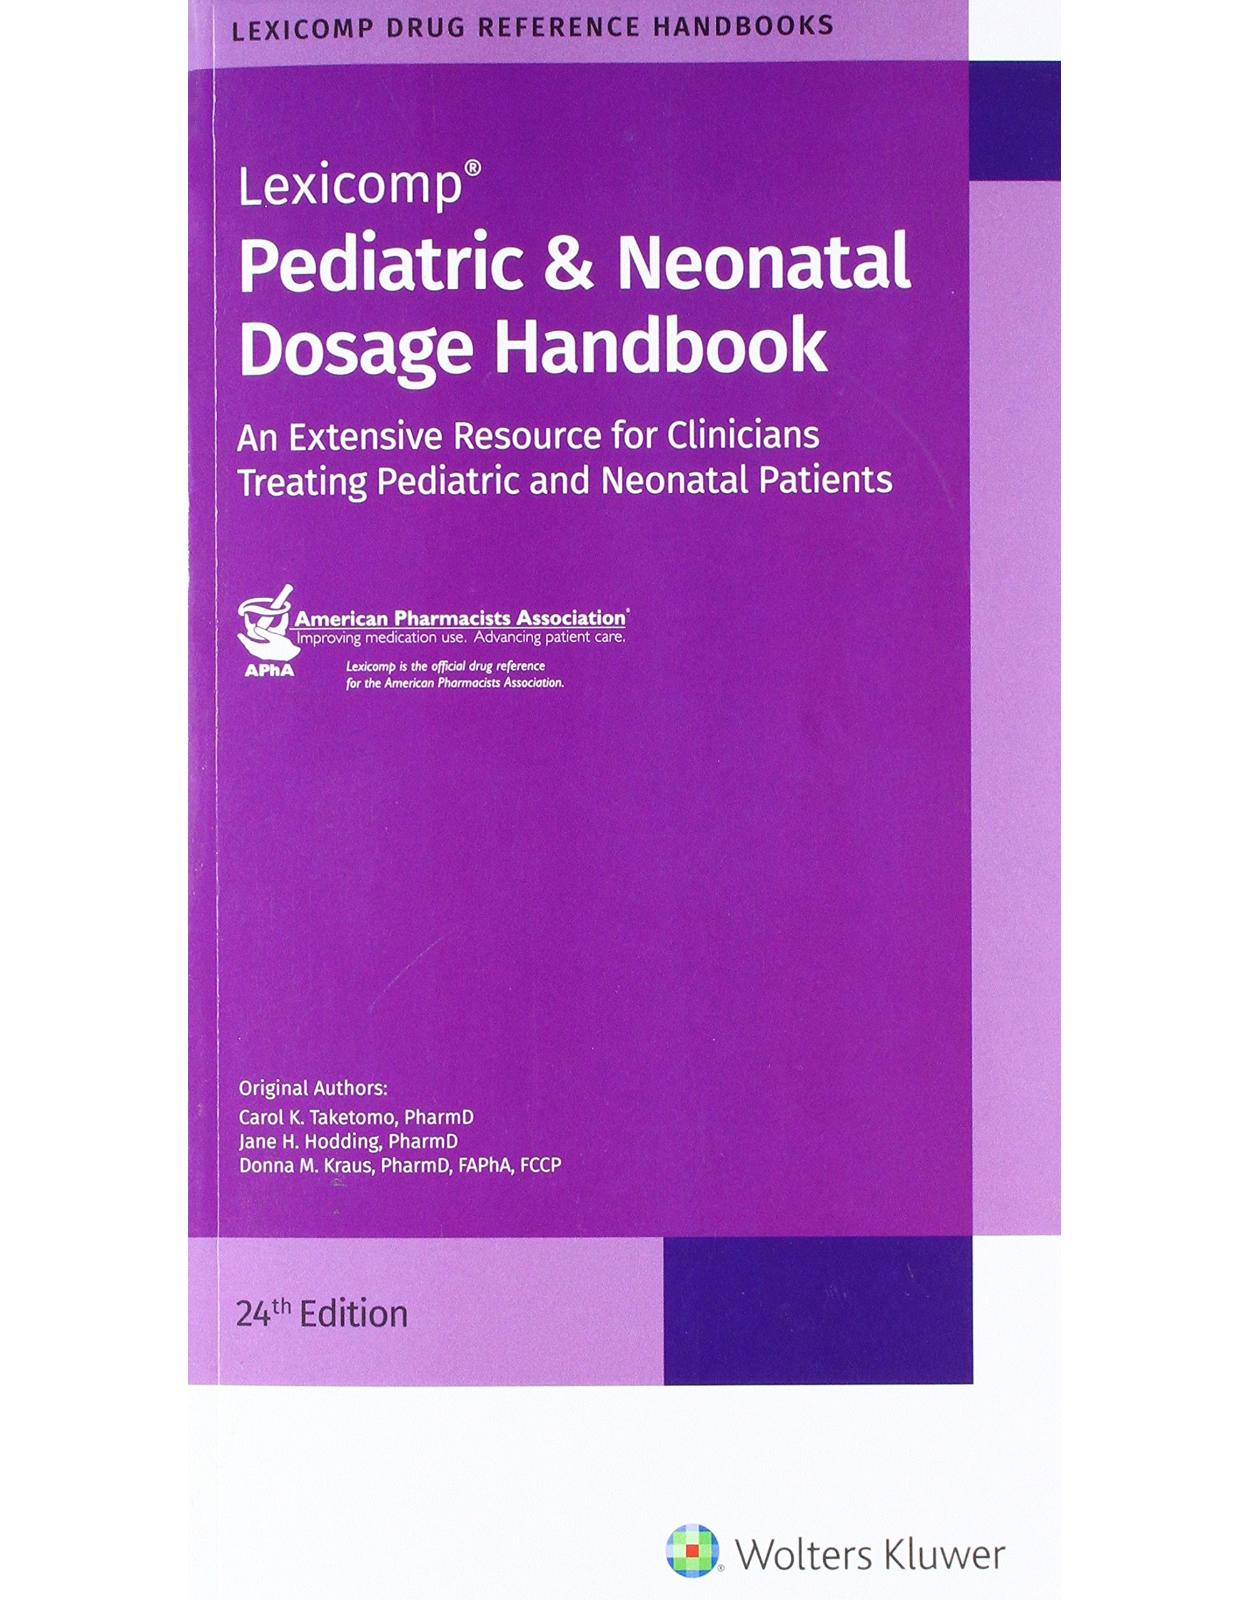 Pediatric & Neonatal Dosage Handbook (Standard/US Edition)